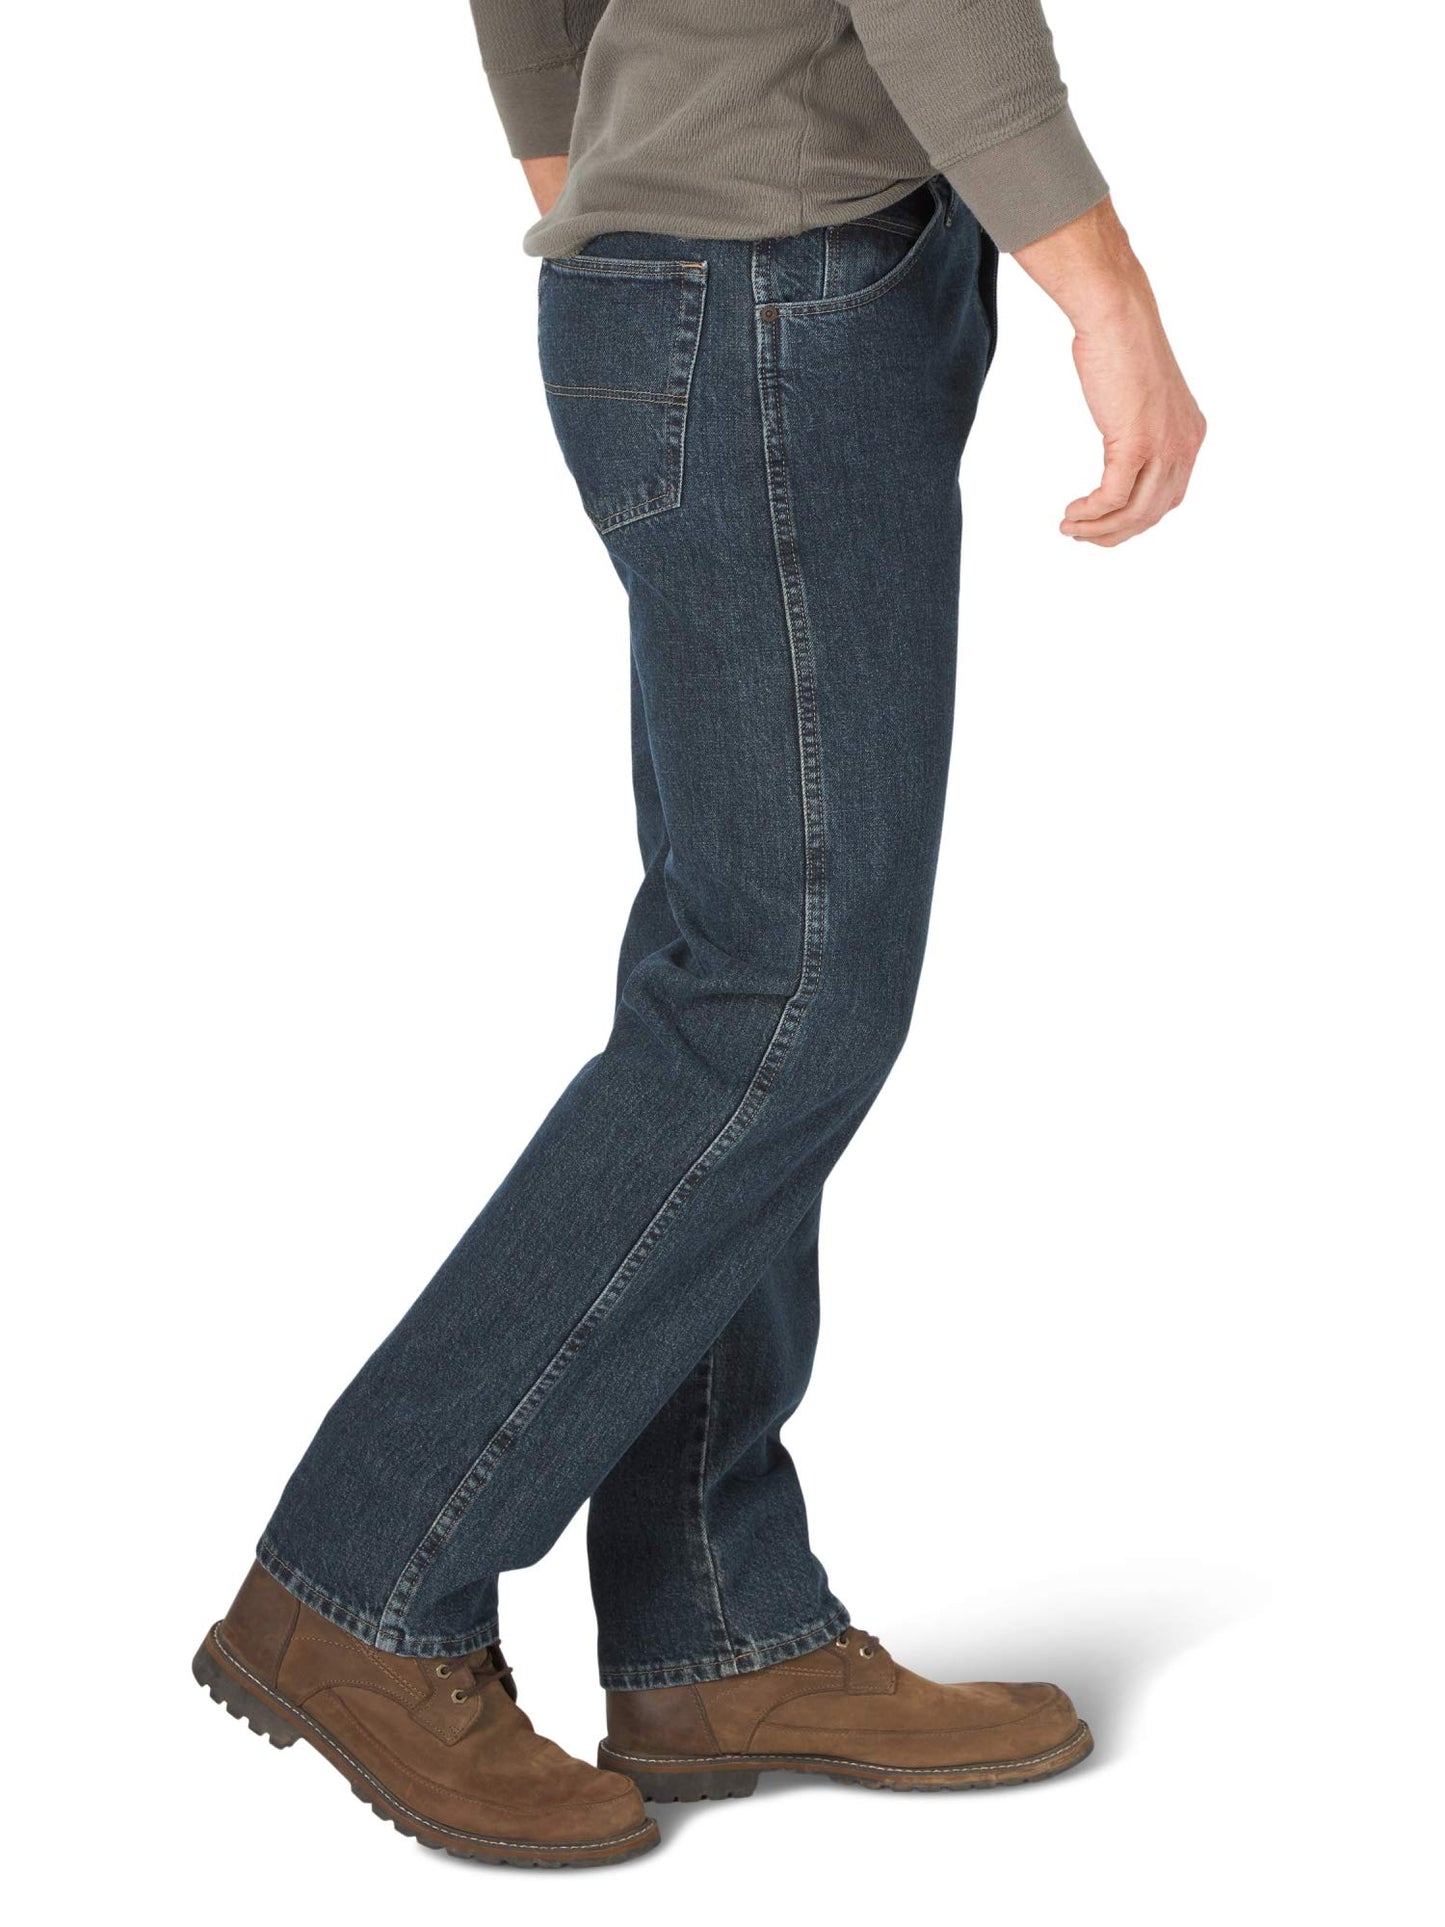 Wrangler Authentics Men's Classic 5-Pocket Regular Fit Cotton Jean, Storm, 29W x 30L